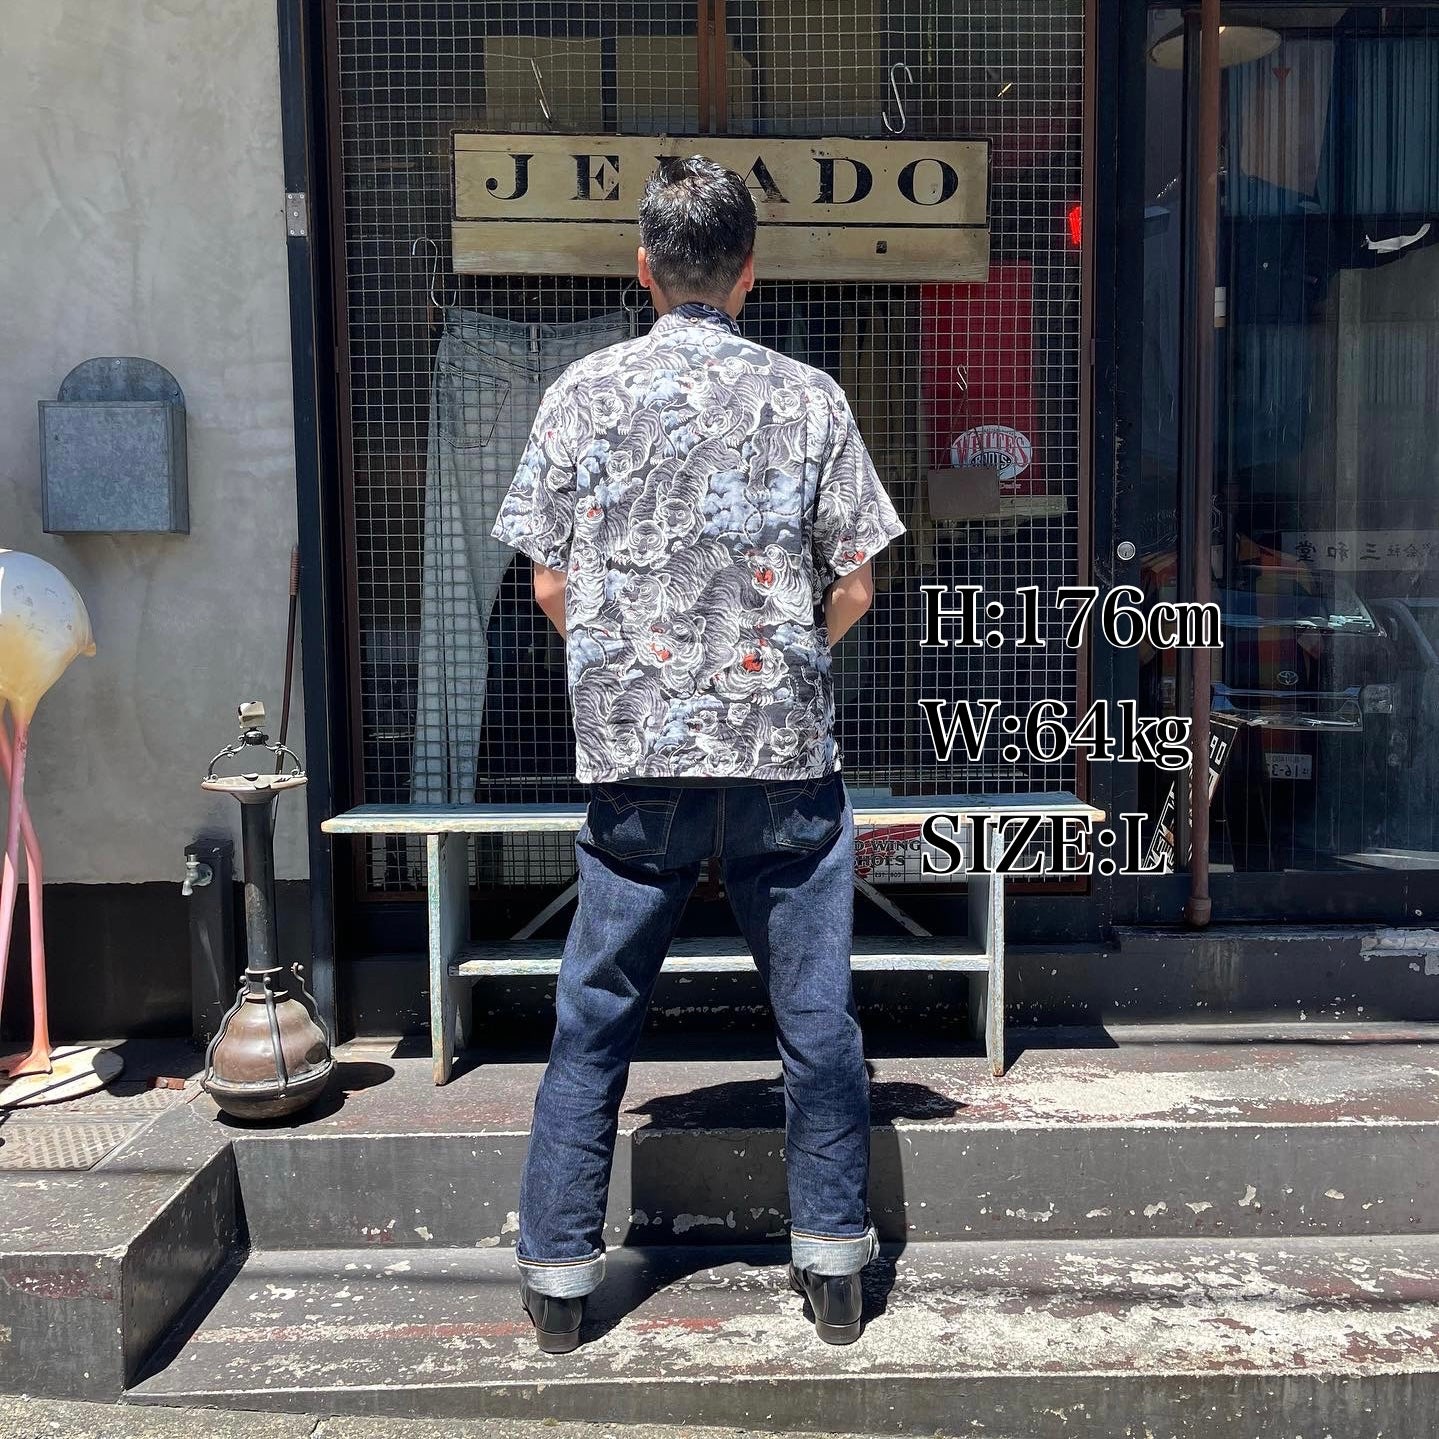 JELADO Pullover Aloha Shirt(プルーオーバーアロハシャツ) One Hundred Tigar Black【SG62107】